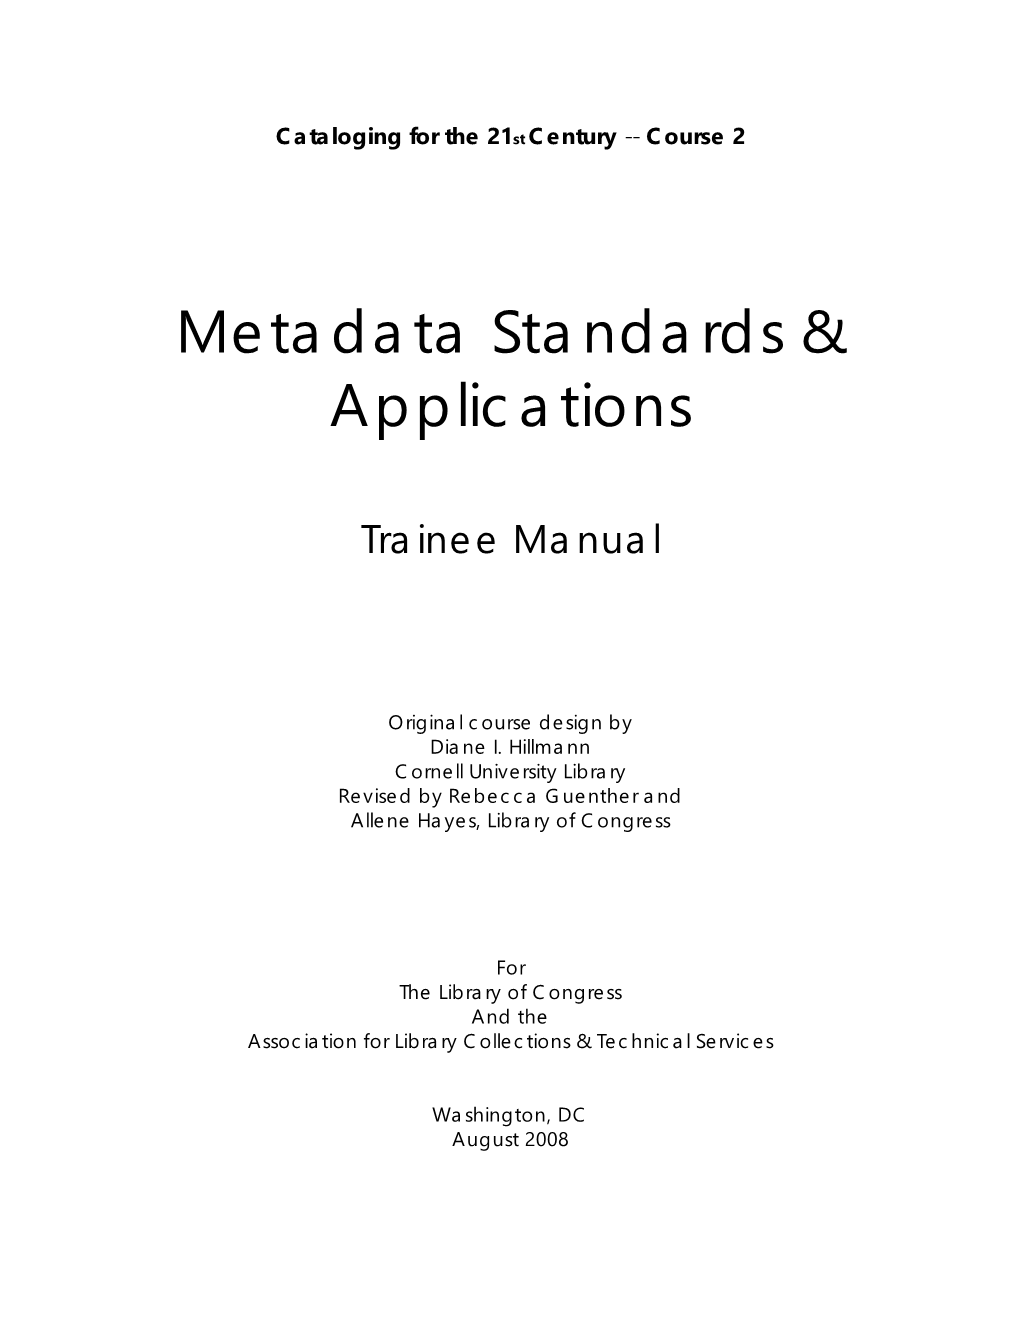 Metadata Standards & Applications